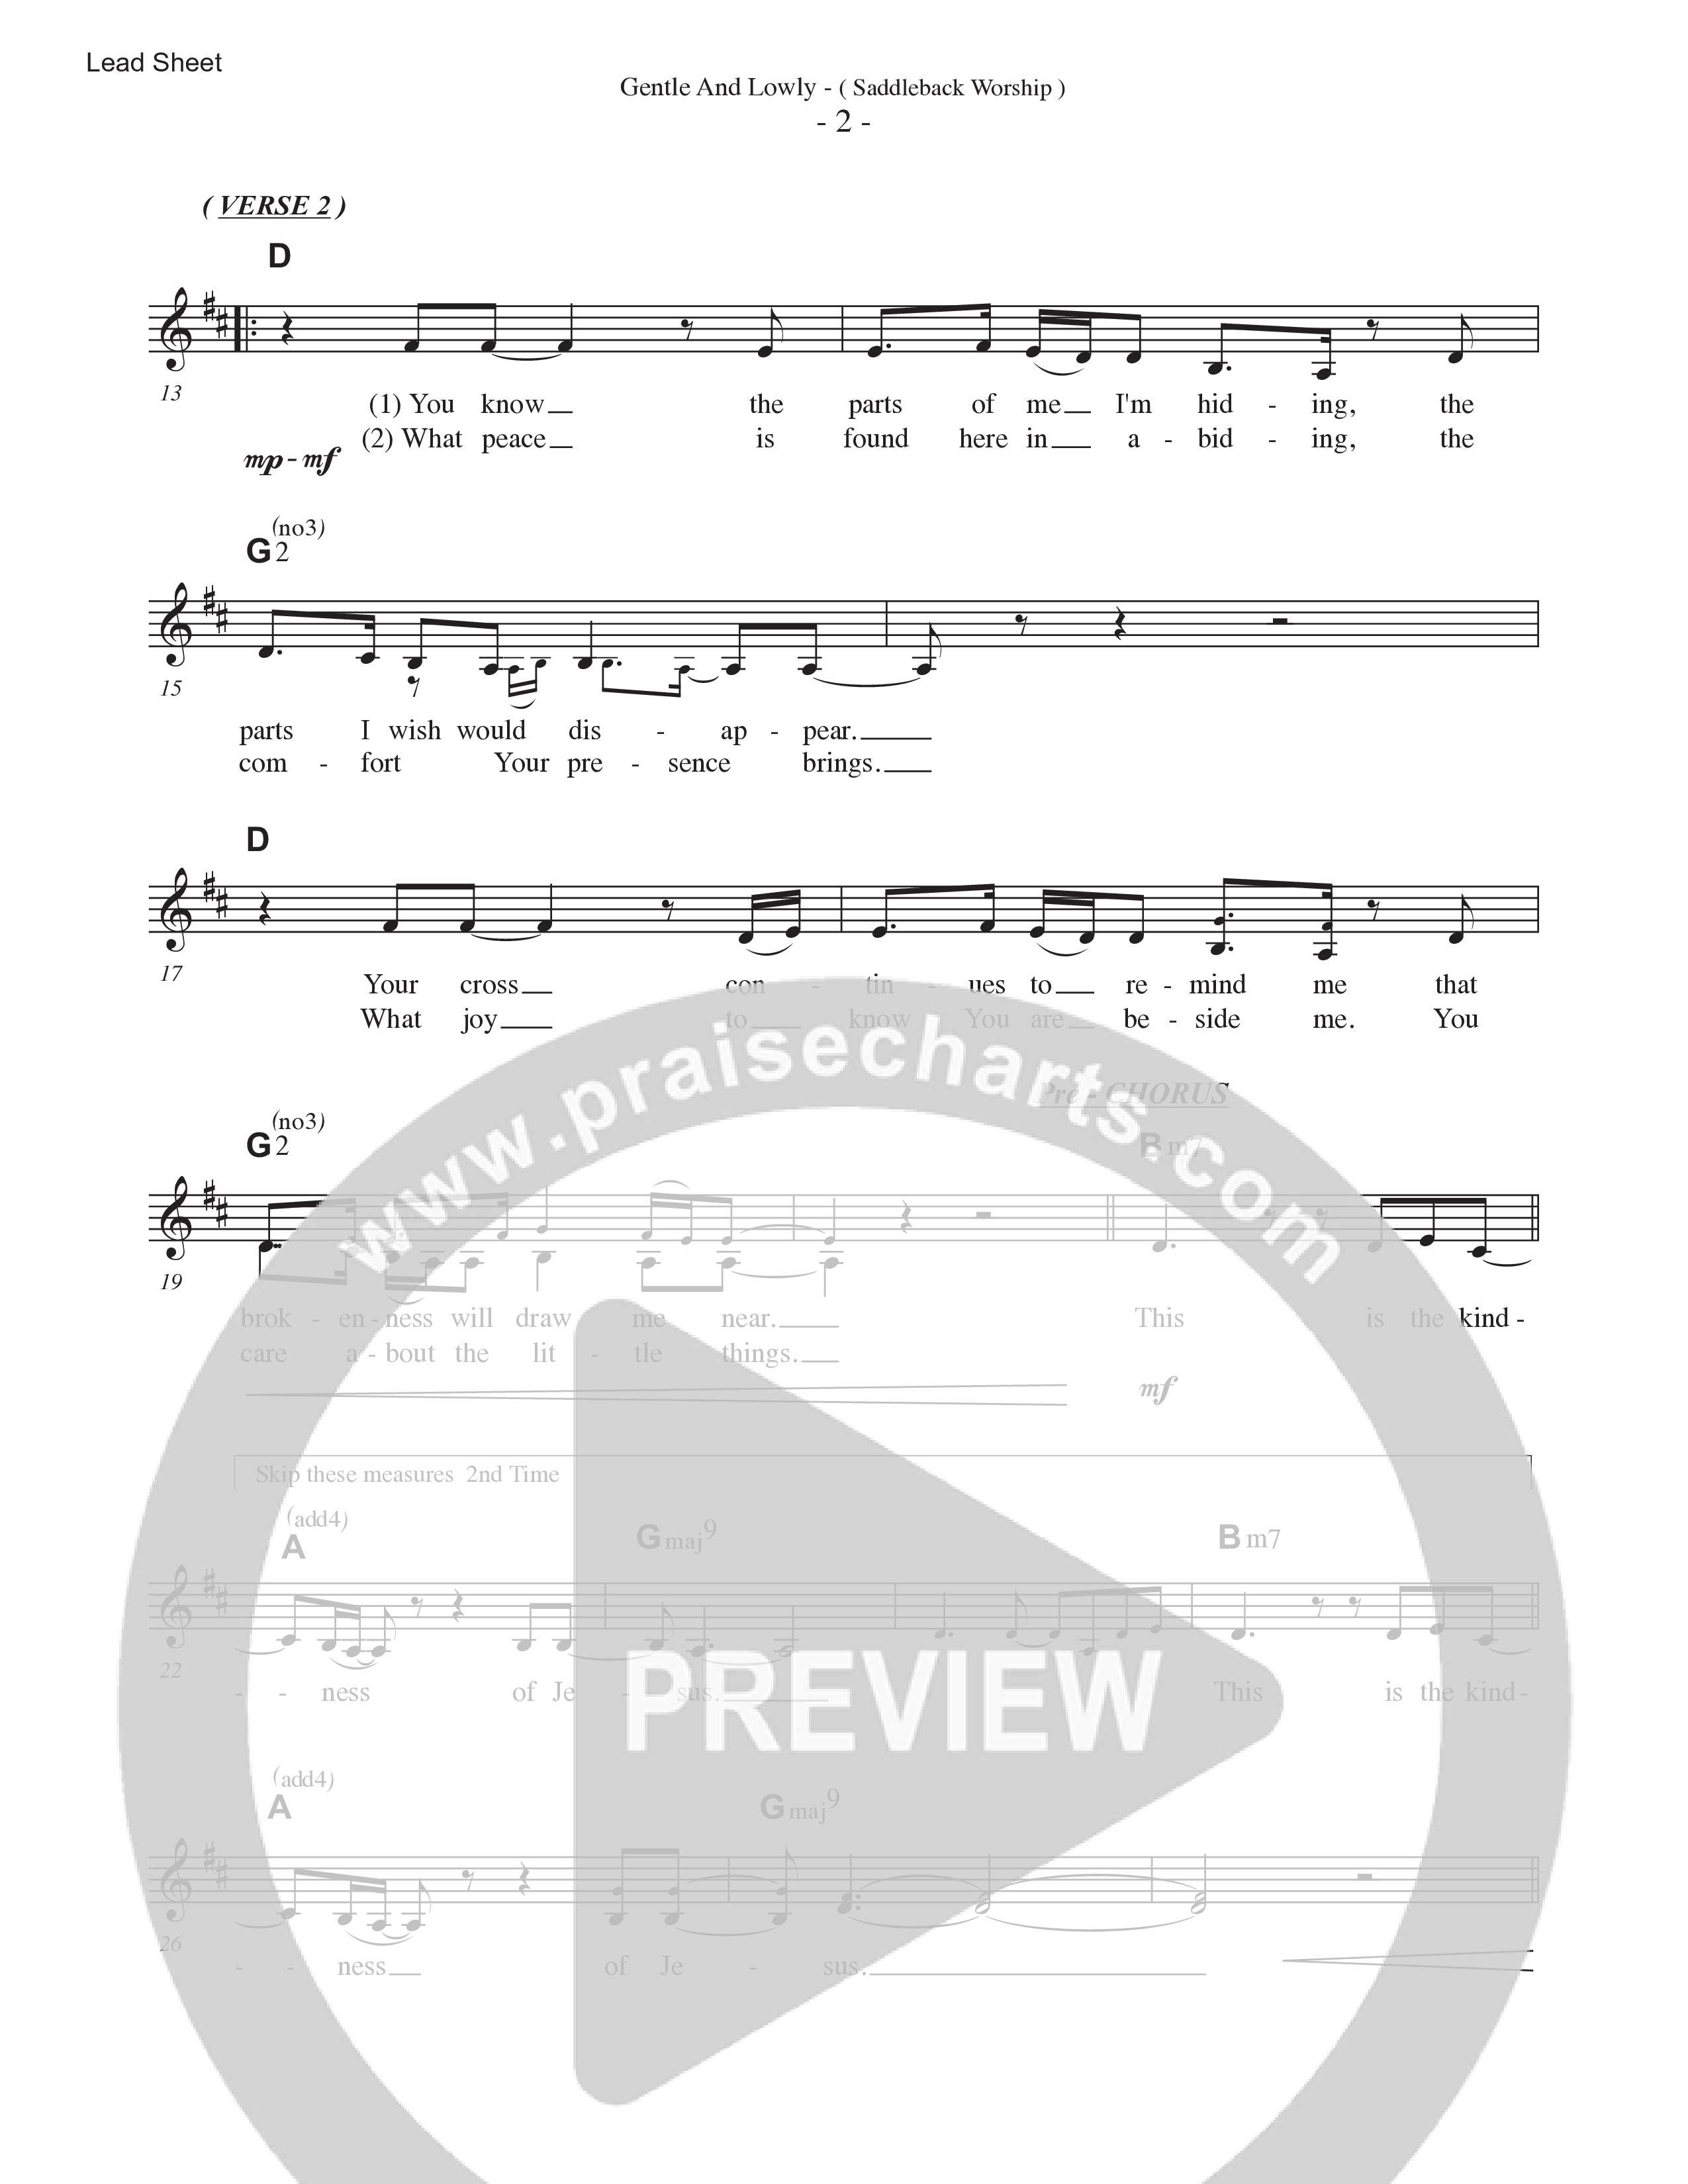 Gentle & Lowly (Live) Lead Sheet Melody (Saddleback Worship)